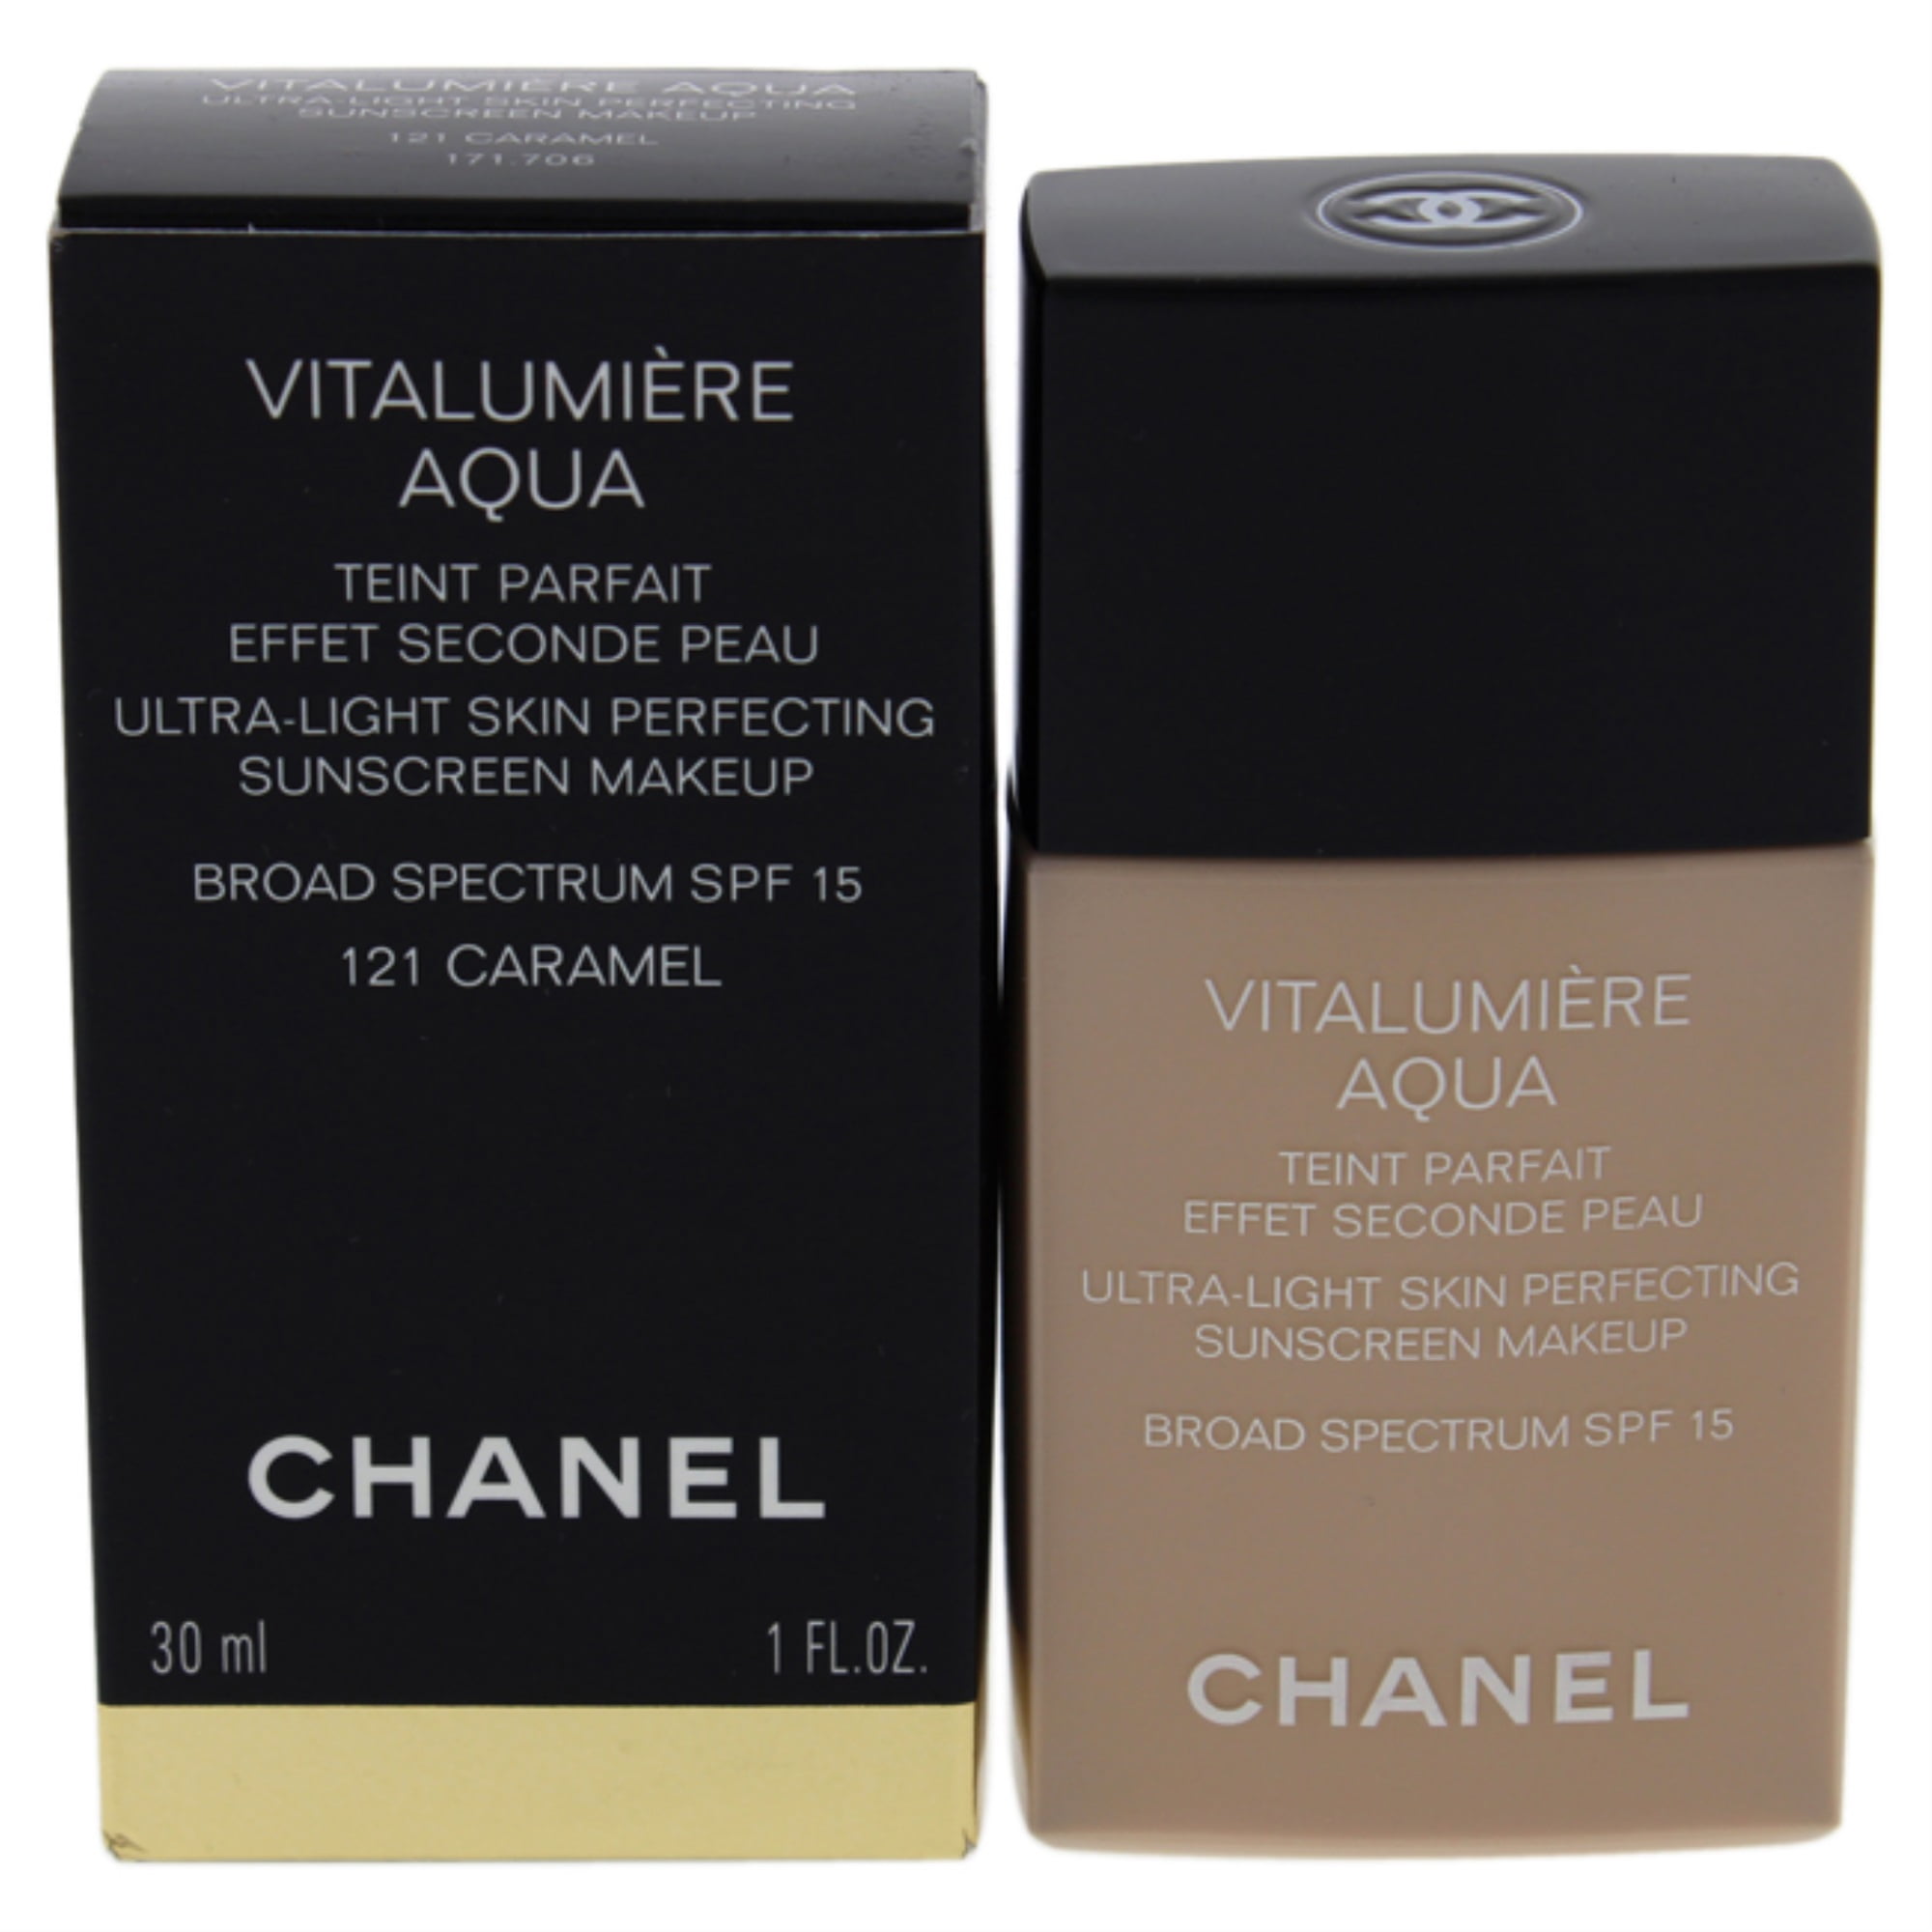 Vitalumiere Aqua Ultra-Light Skin Perfecting Sunscreen Makeup SPF 15 - 121  Caramel by Chanel for Women - 1 oz Foundation 